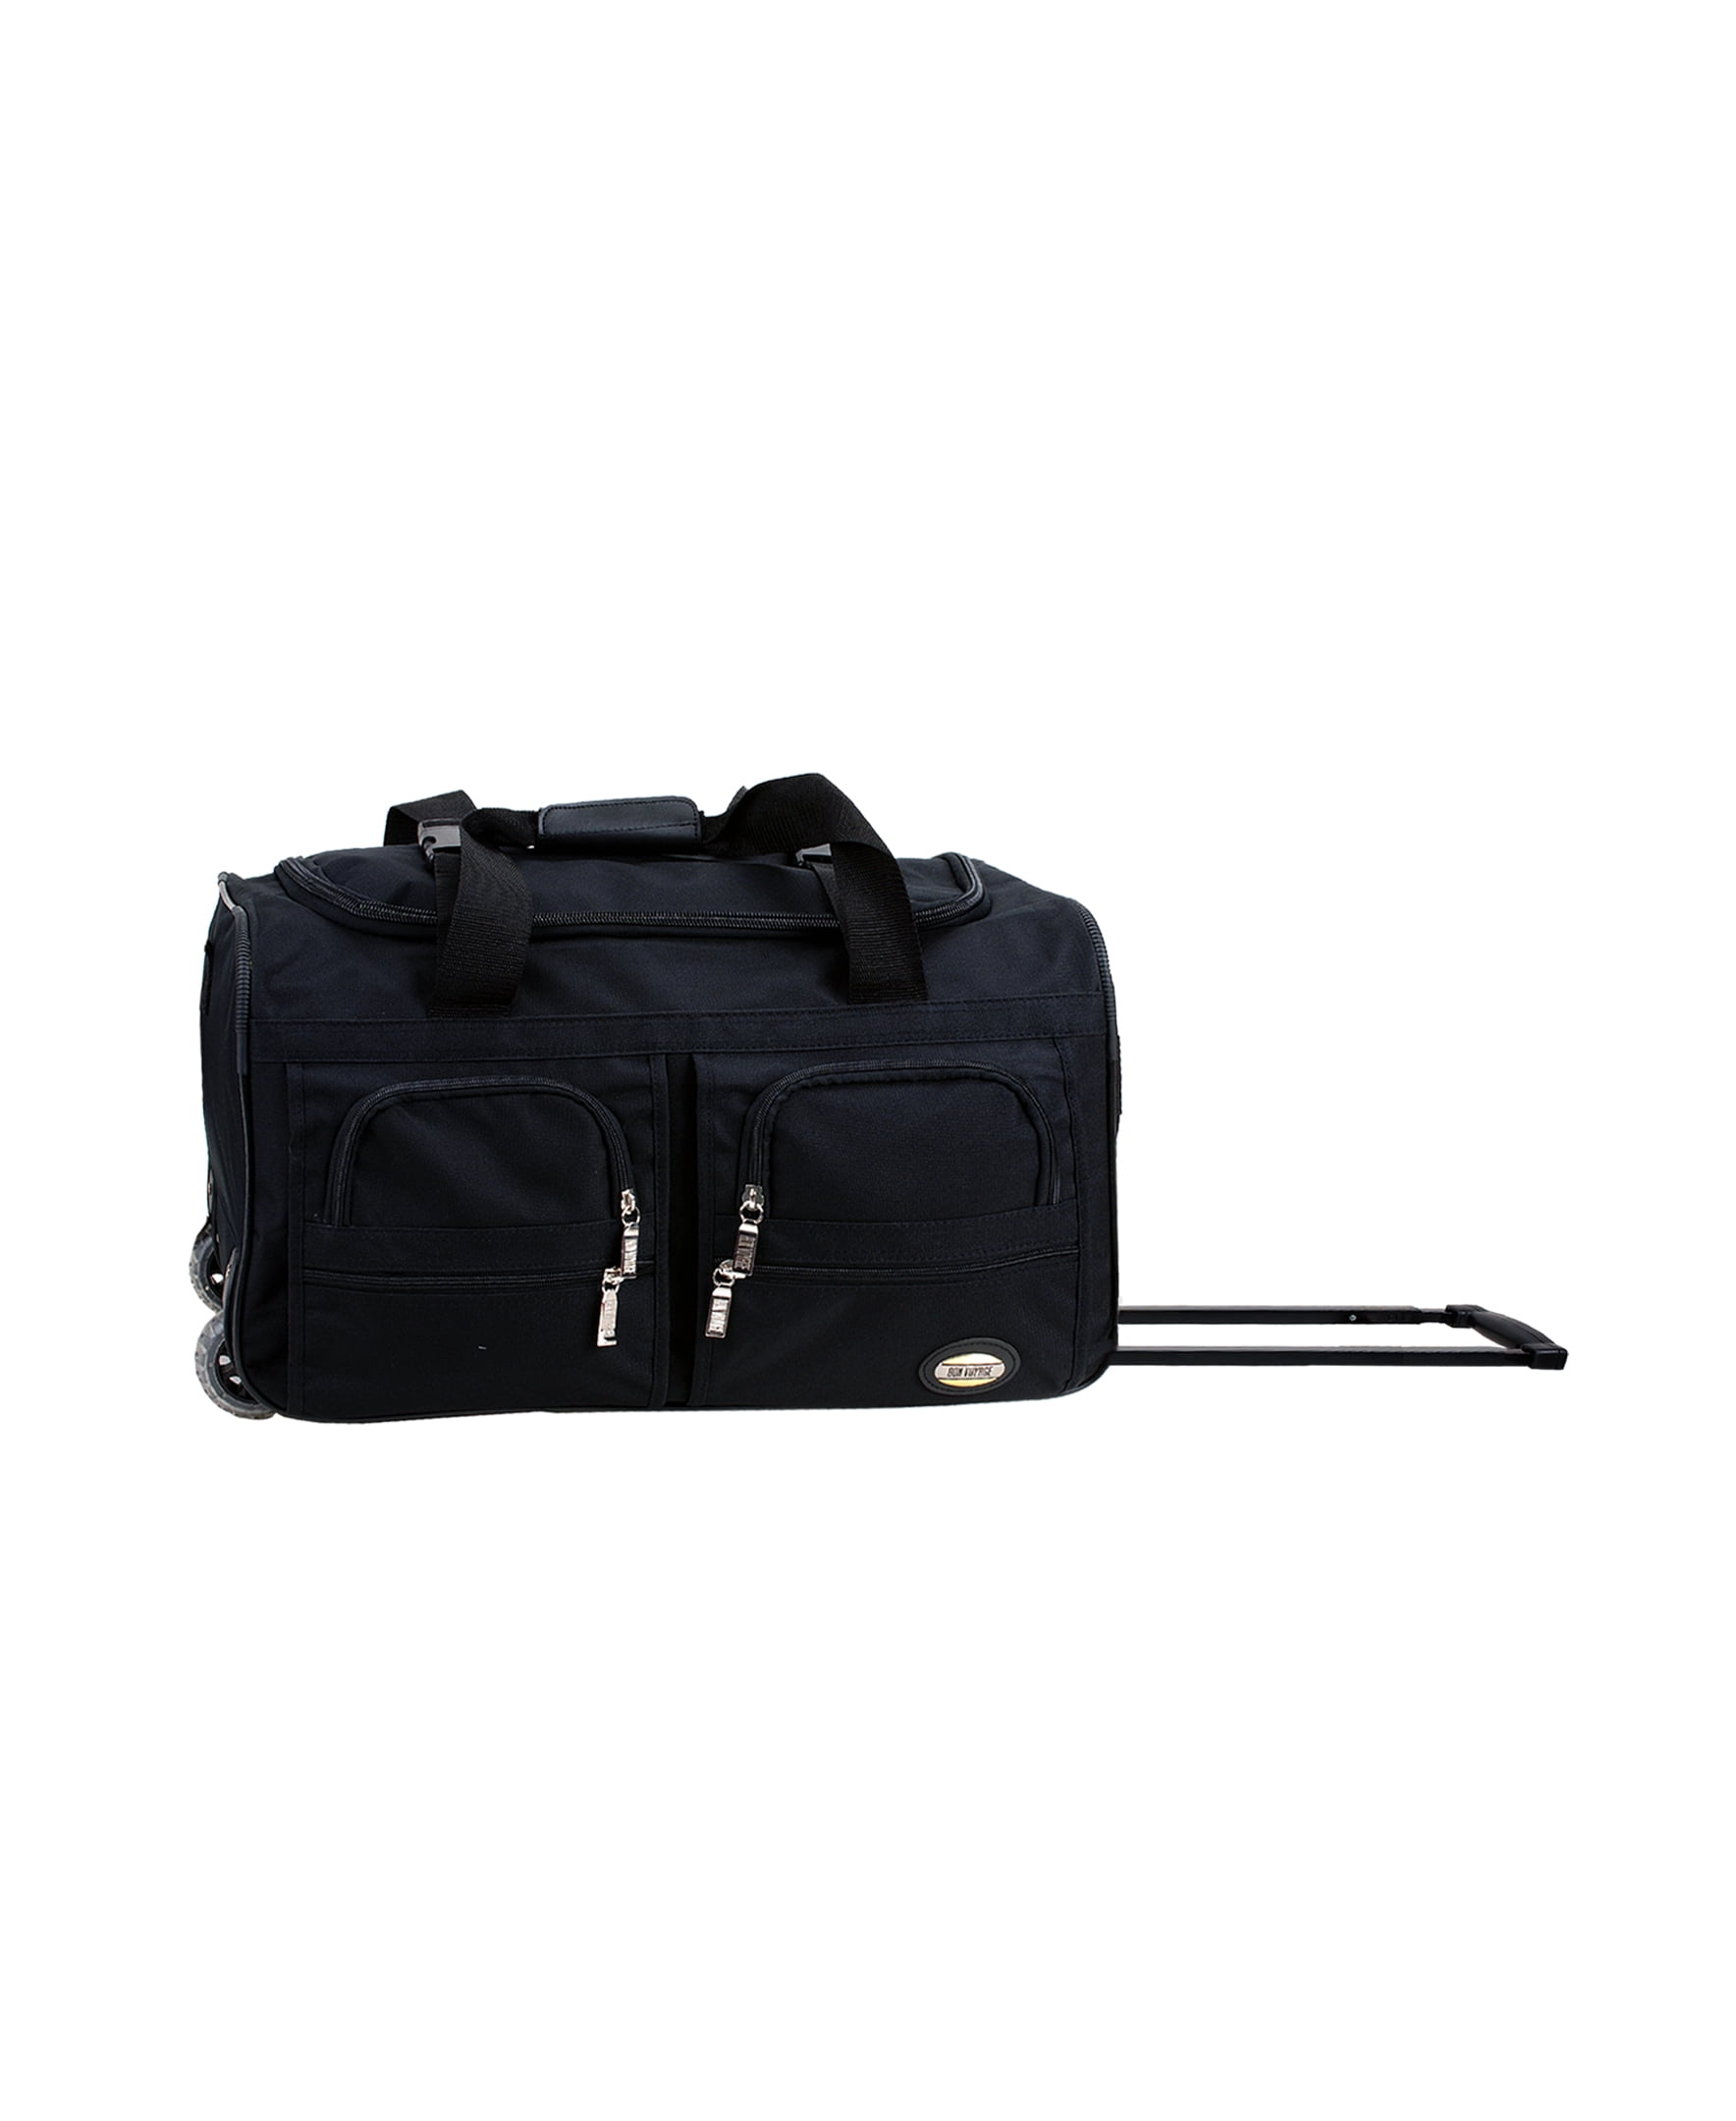 22-inches NCAA Wheeled Duffel Bag